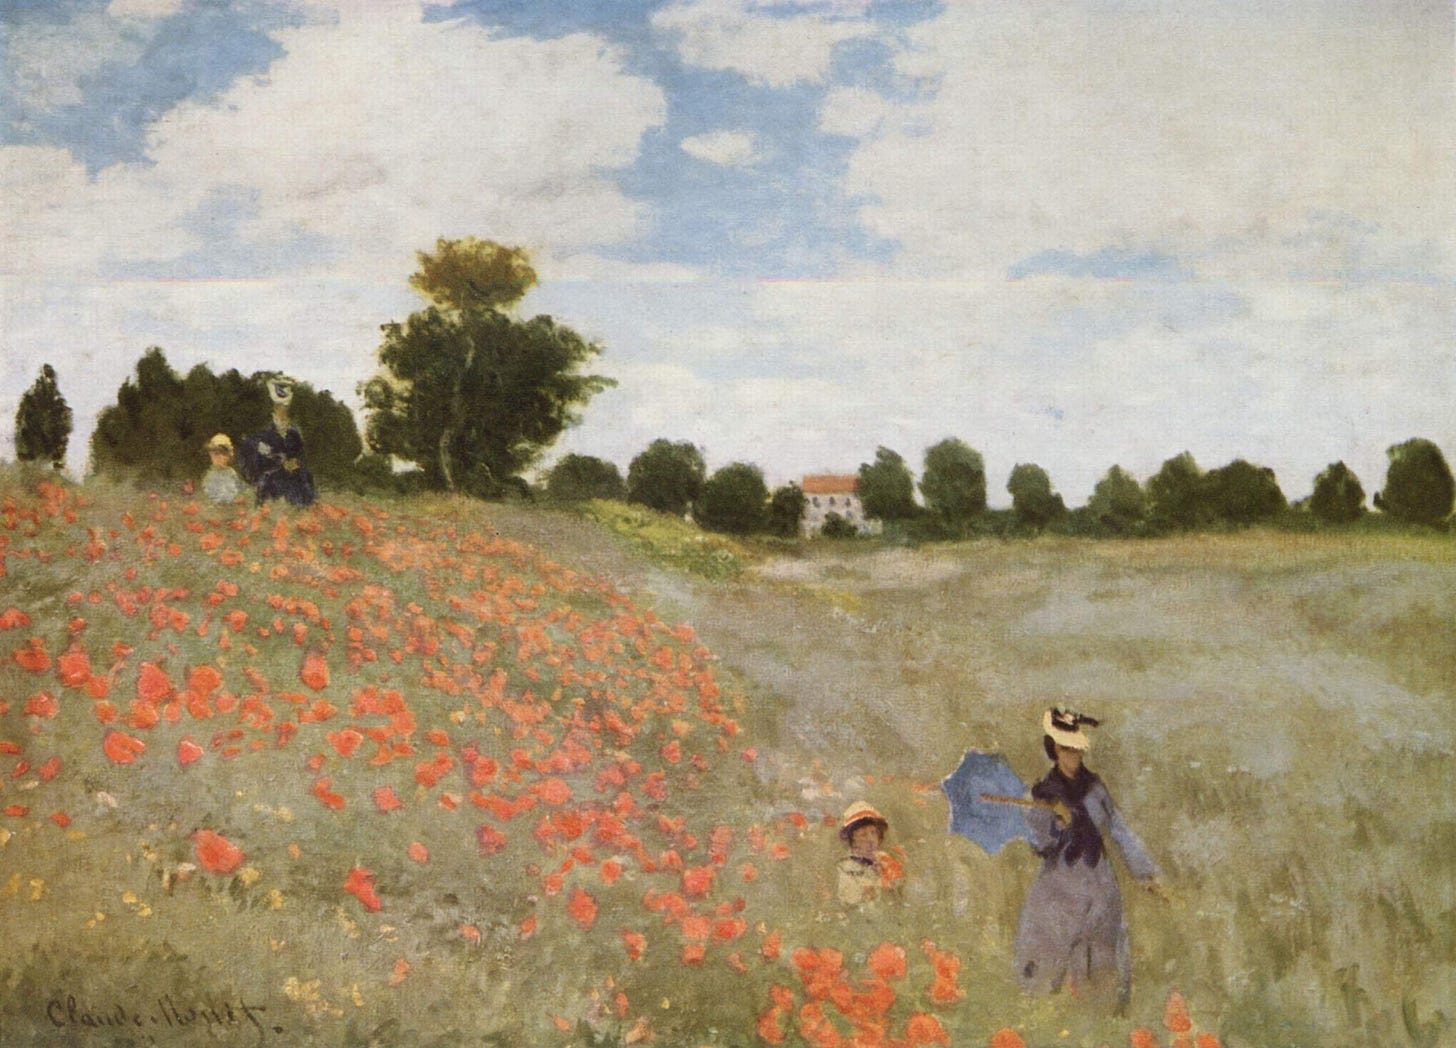 File:Claude Monet 037.jpg - Wikimedia Commons